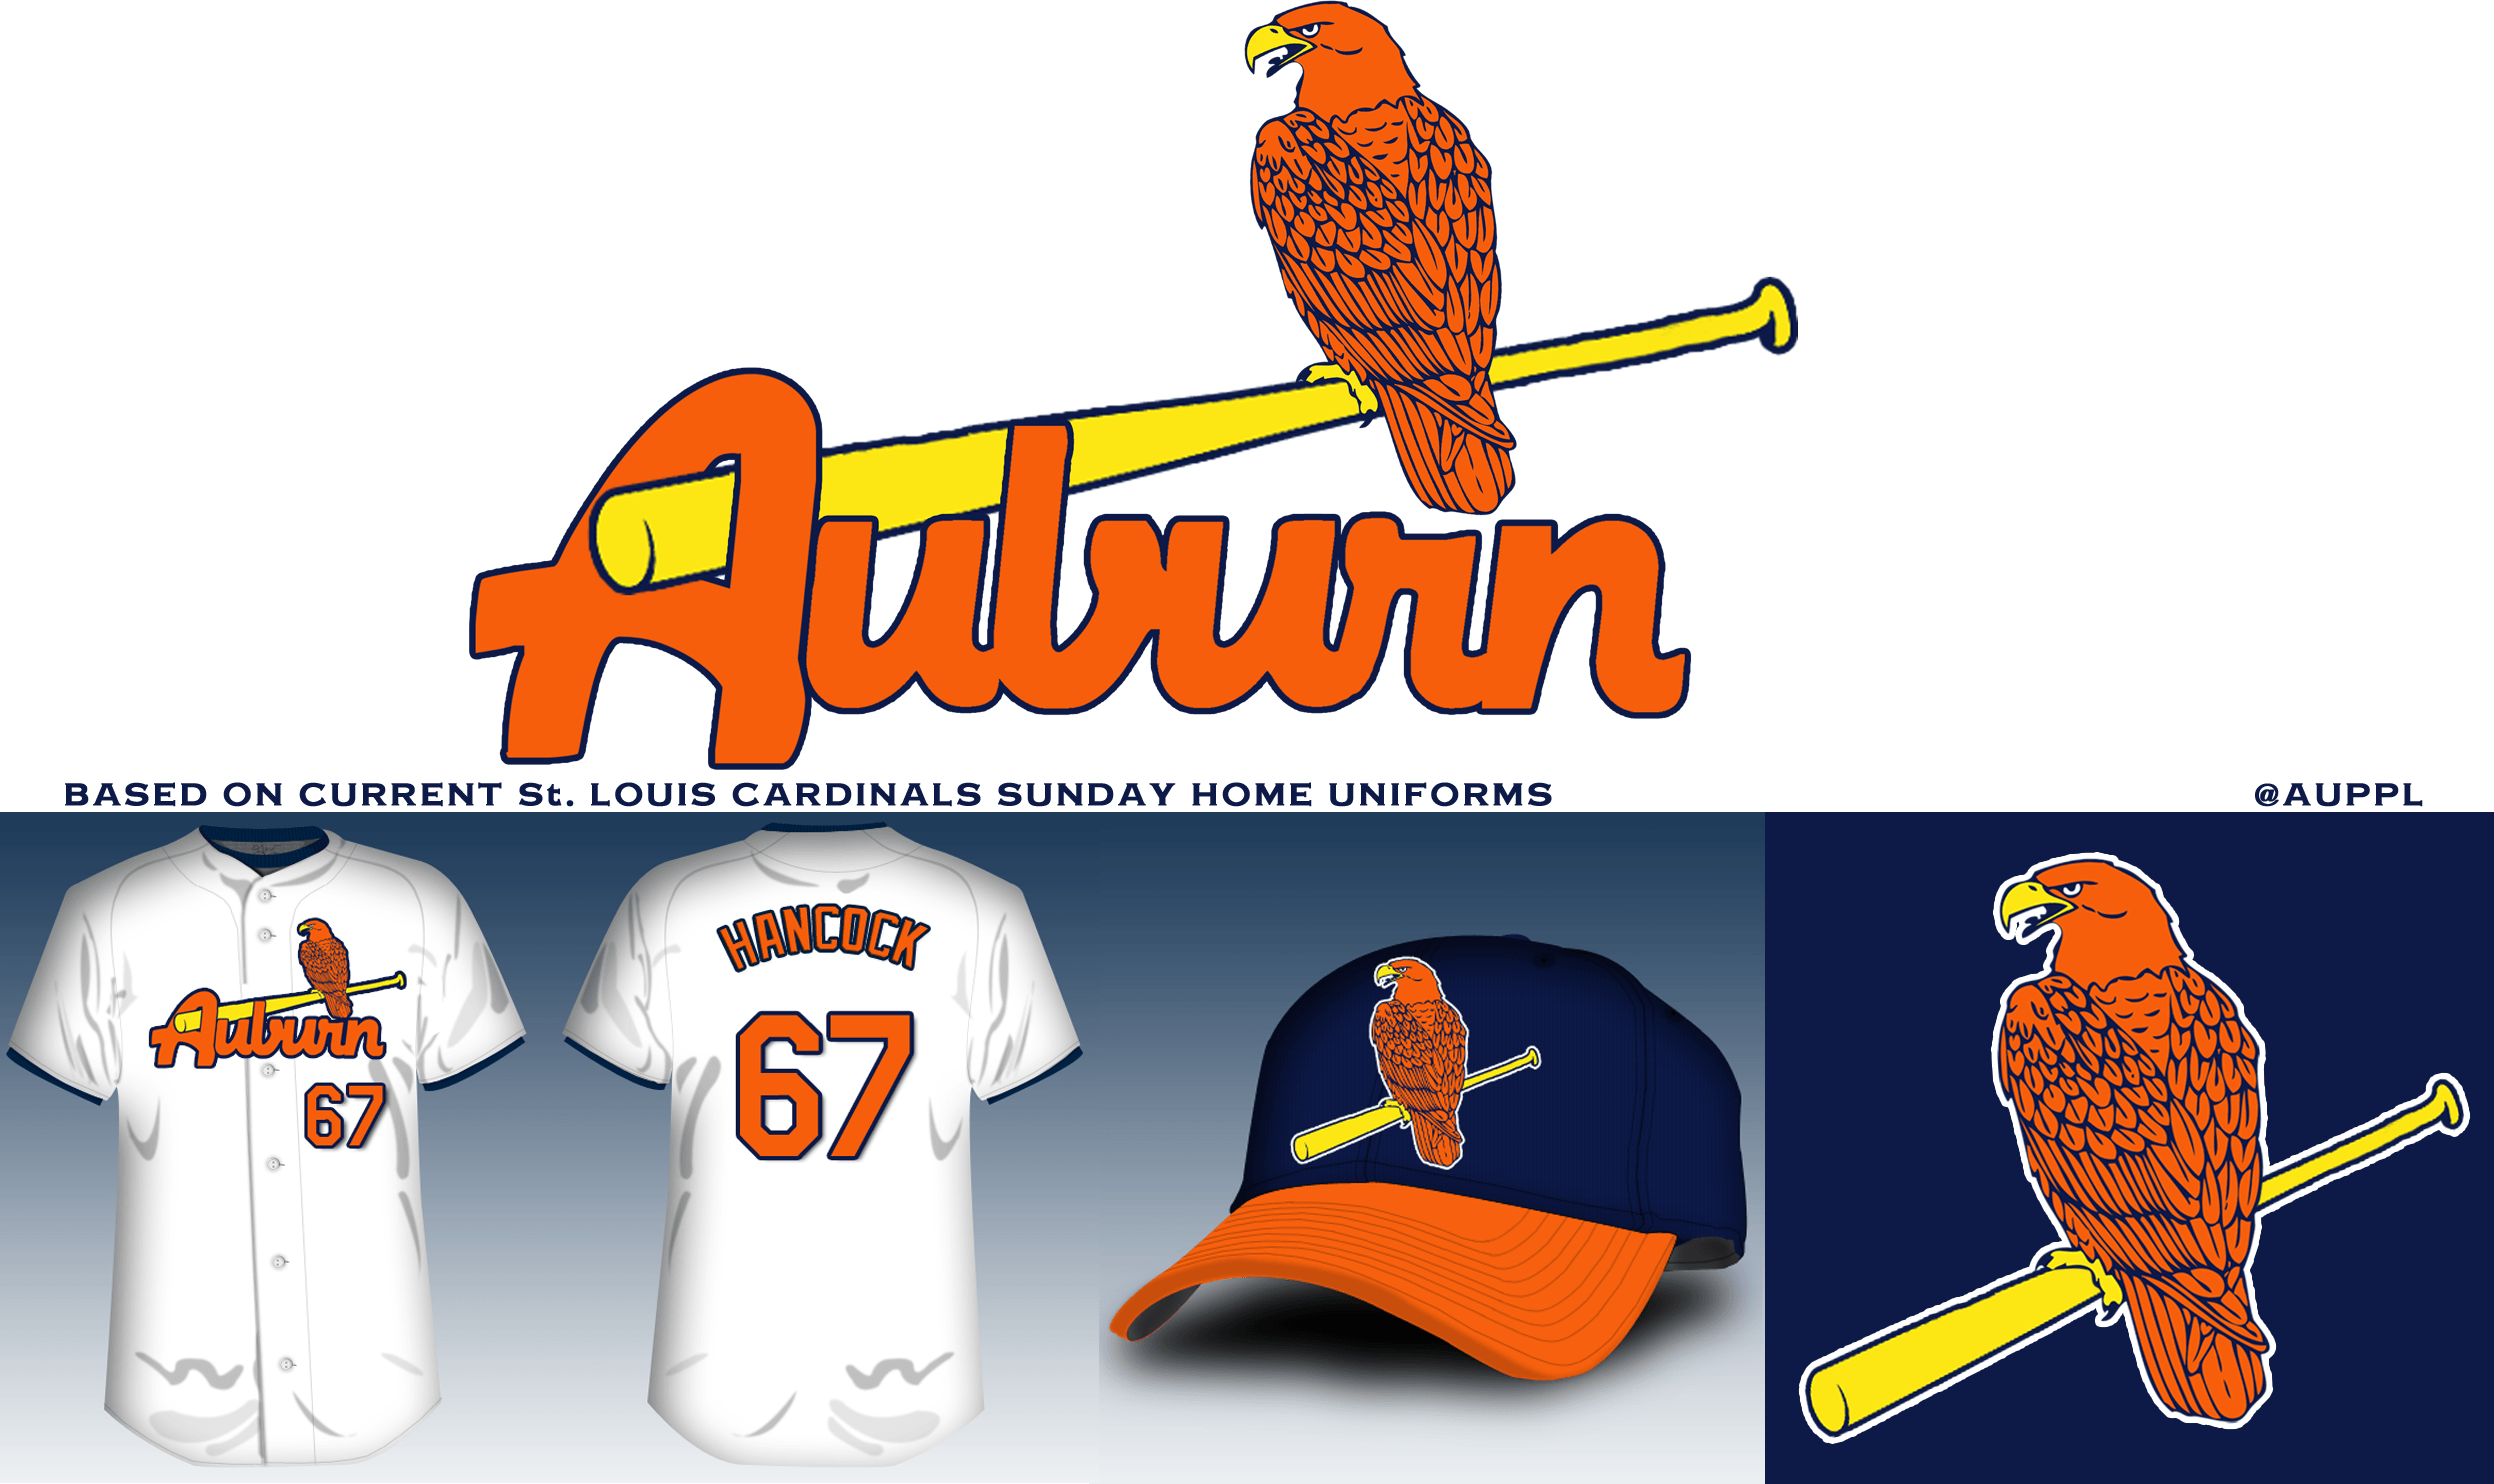 The Birds On Bat Logo - Redesigning the Auburn baseball uniform and Magnolia